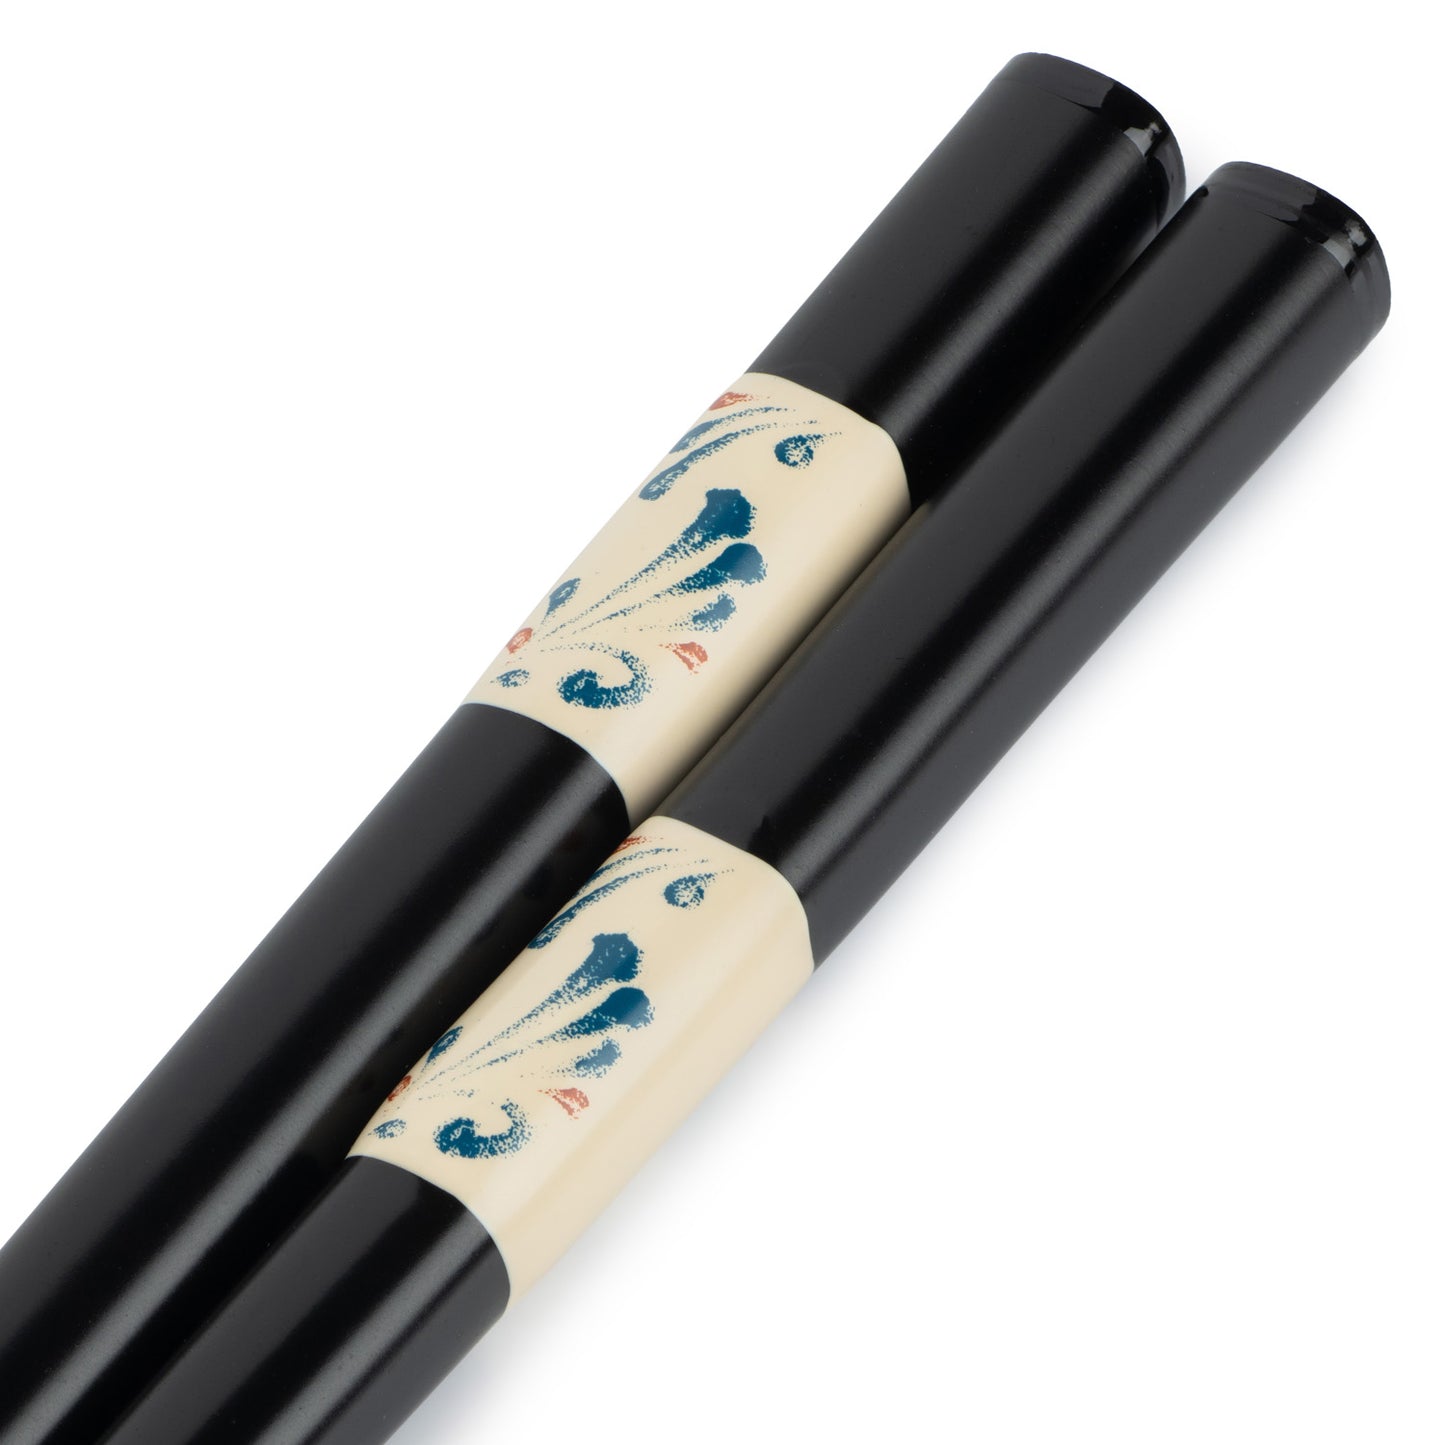 Karakusa Black Japanese Wooden Chopsticks handle